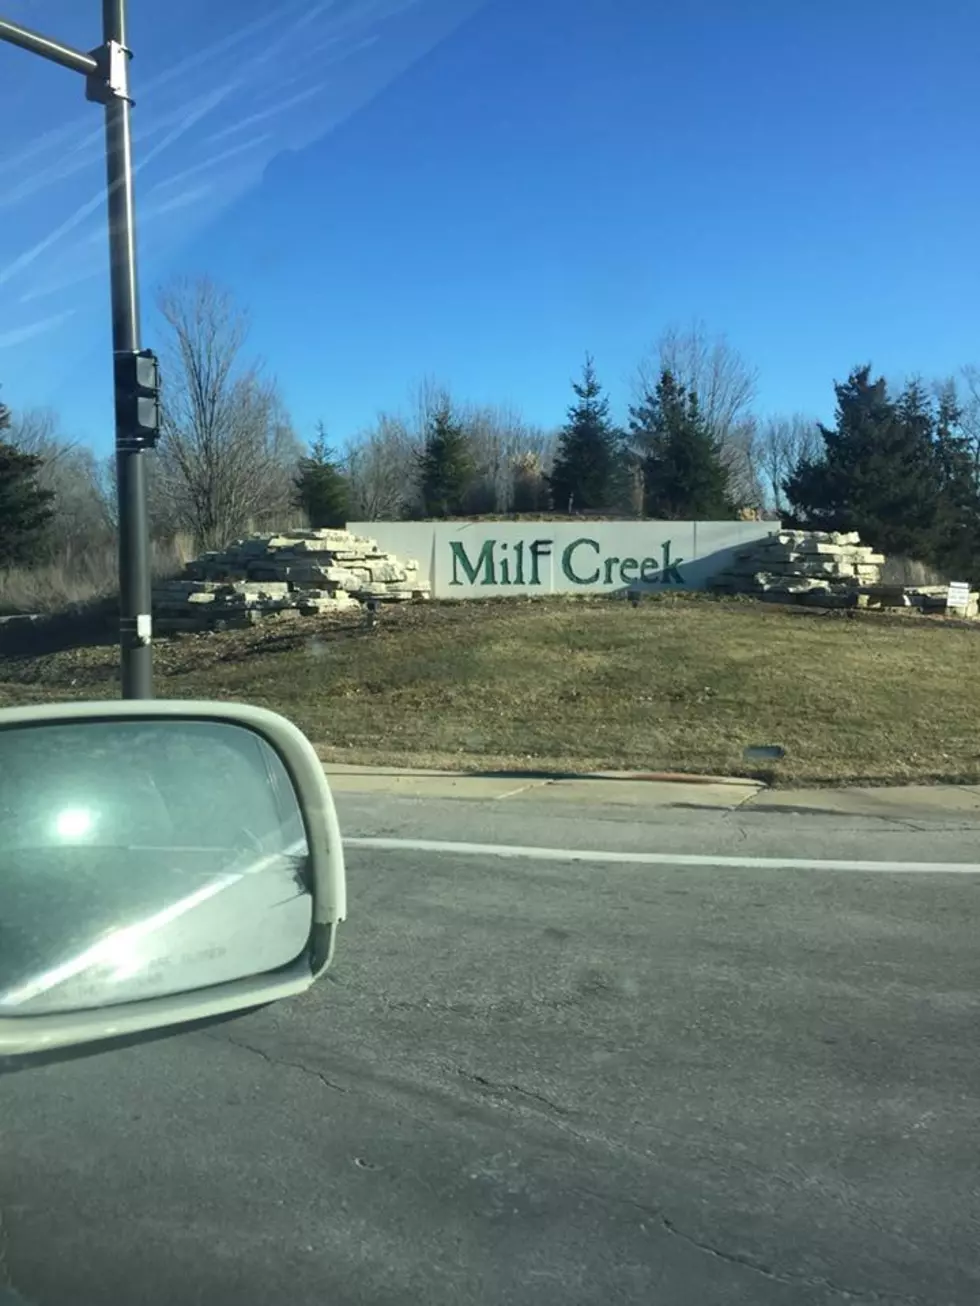 MILF Creek?